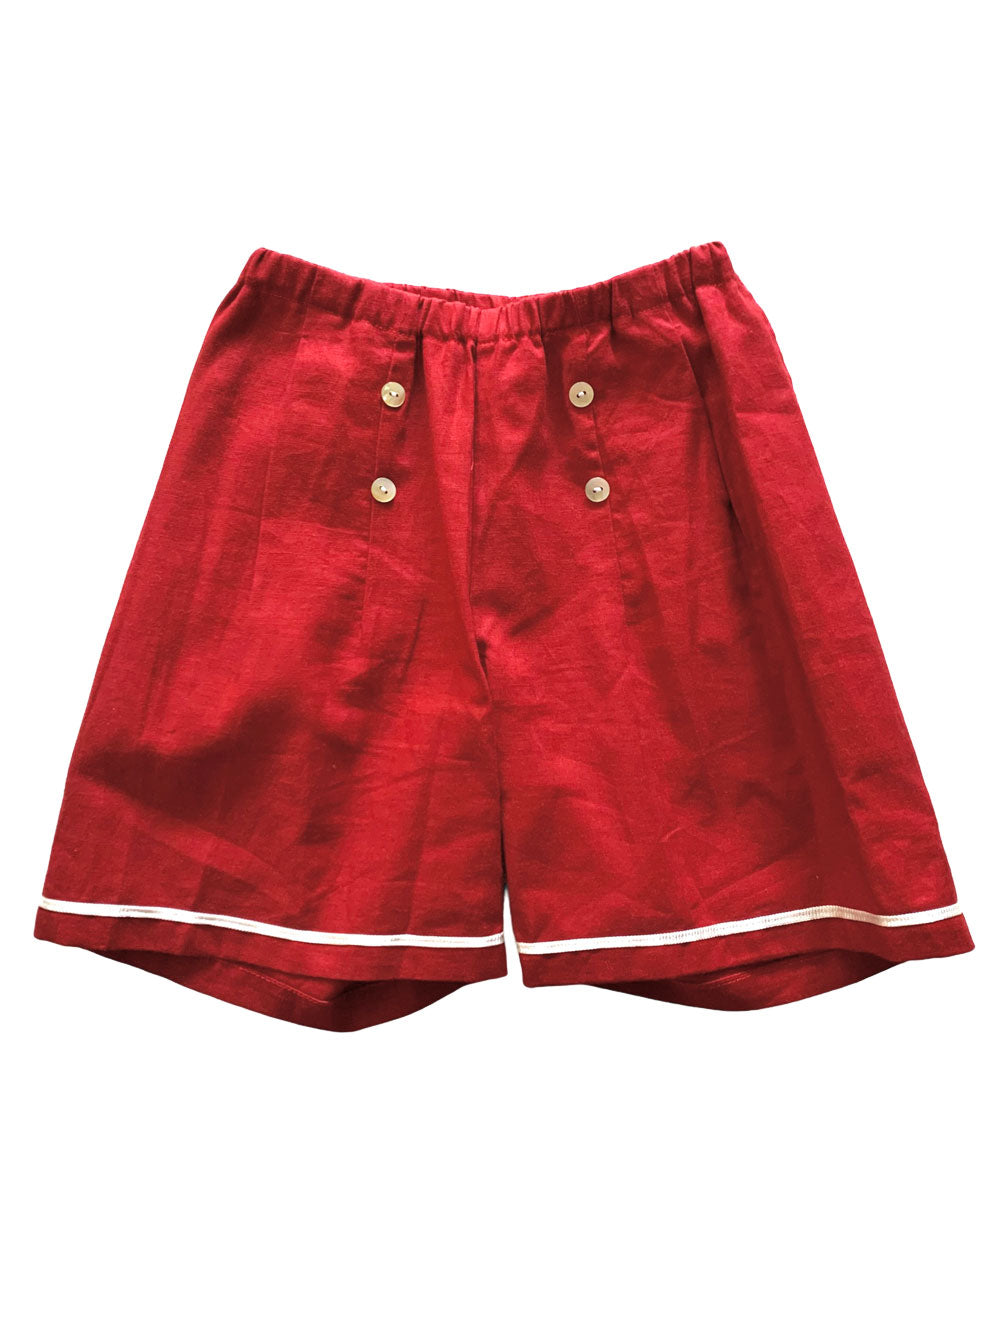 PREORDER: Bordeaux Sailor Shorts